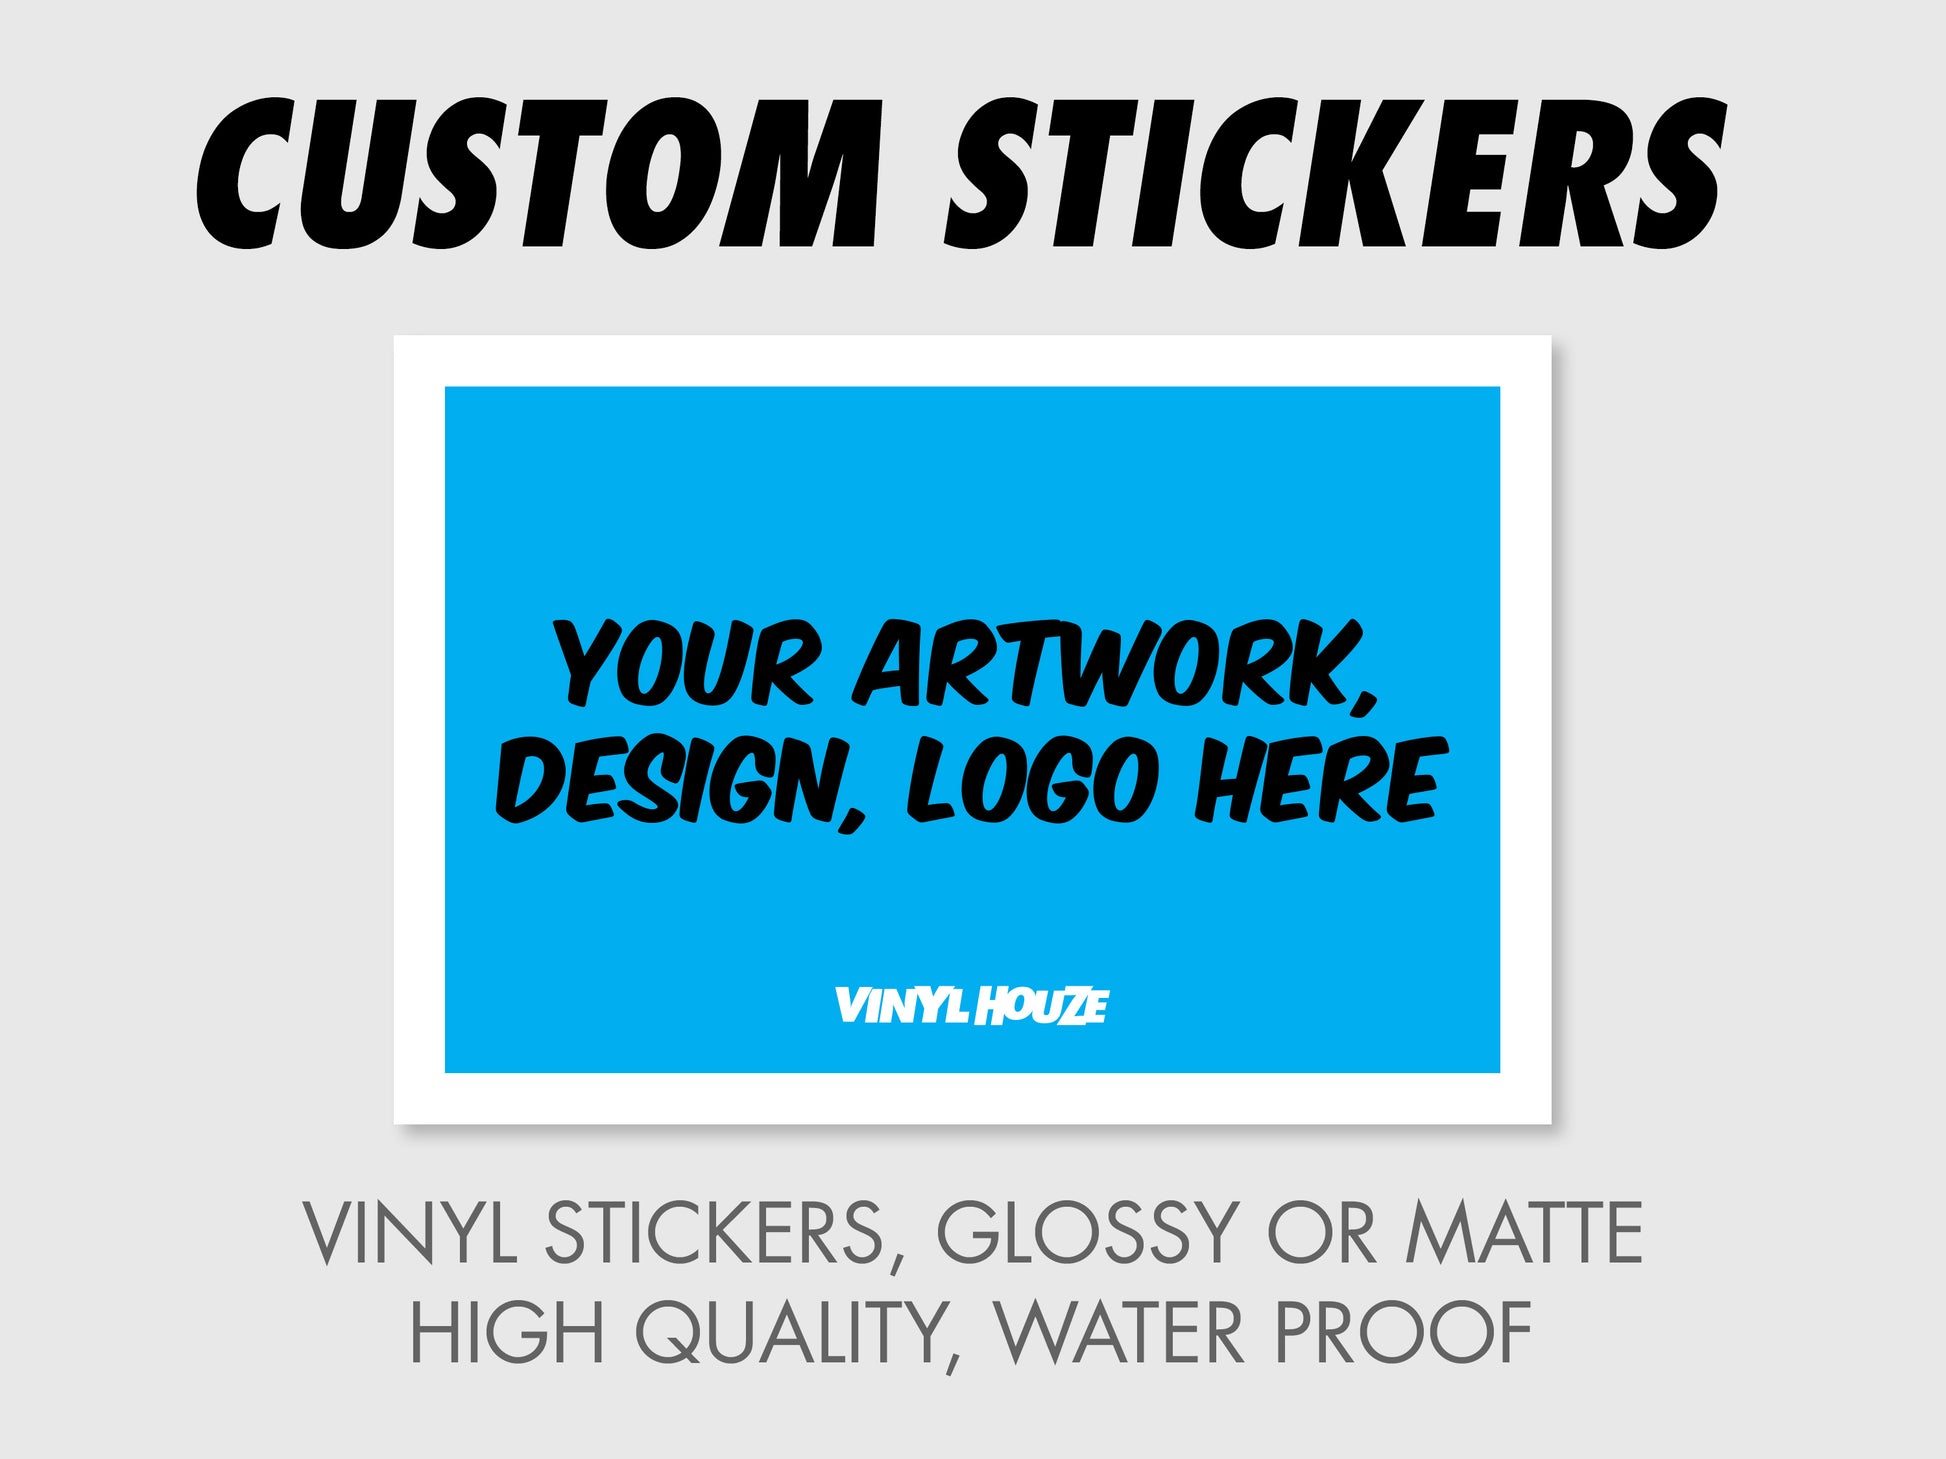 Custom Stickers - Design Your Vinyl Stickers